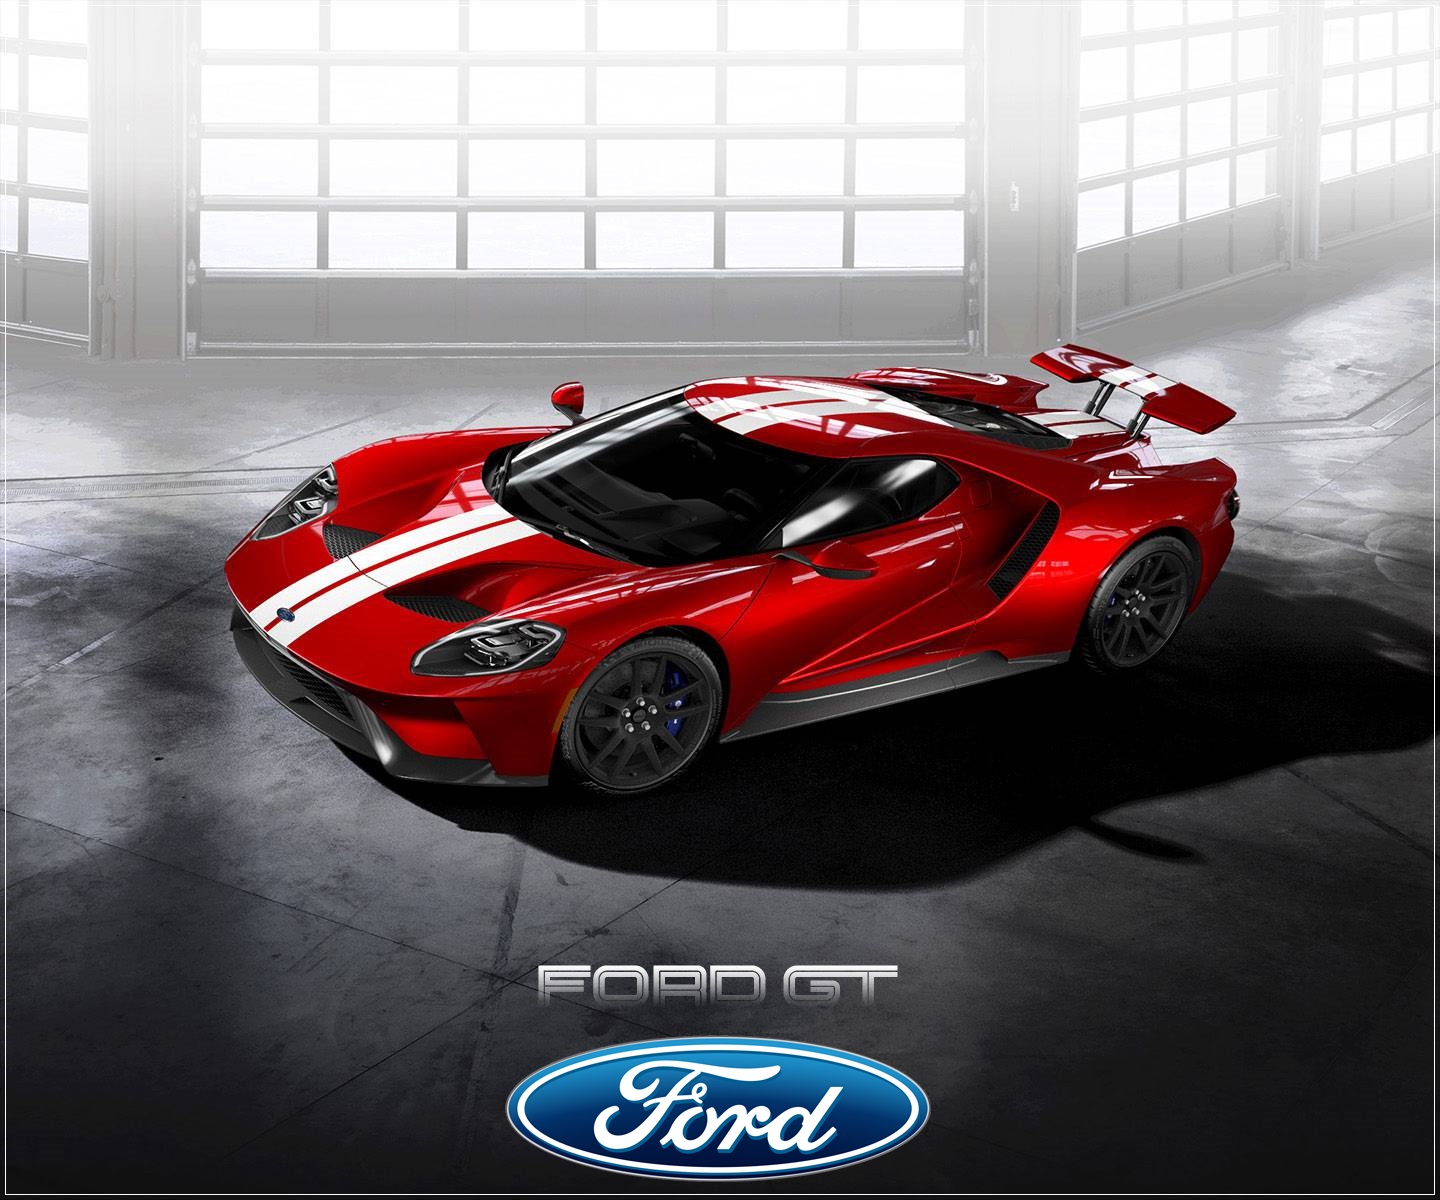  Ford GT 2017 Yılında yollarda olacakmış.